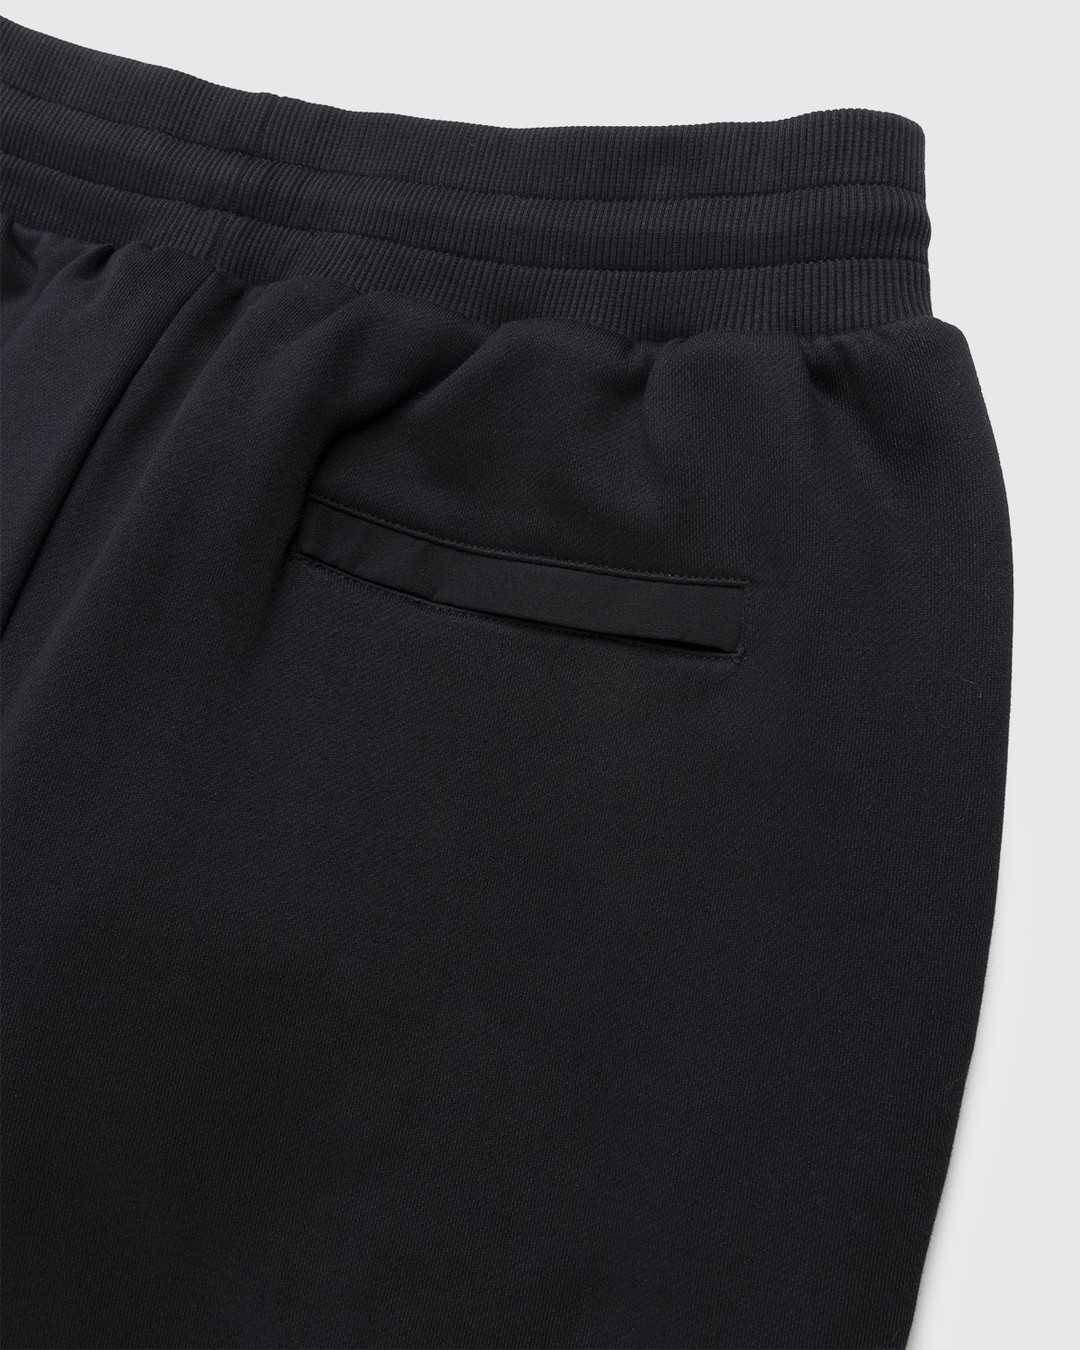 A-Cold-Wall* – Granular Sweatpants Black - Pants - Black - Image 3